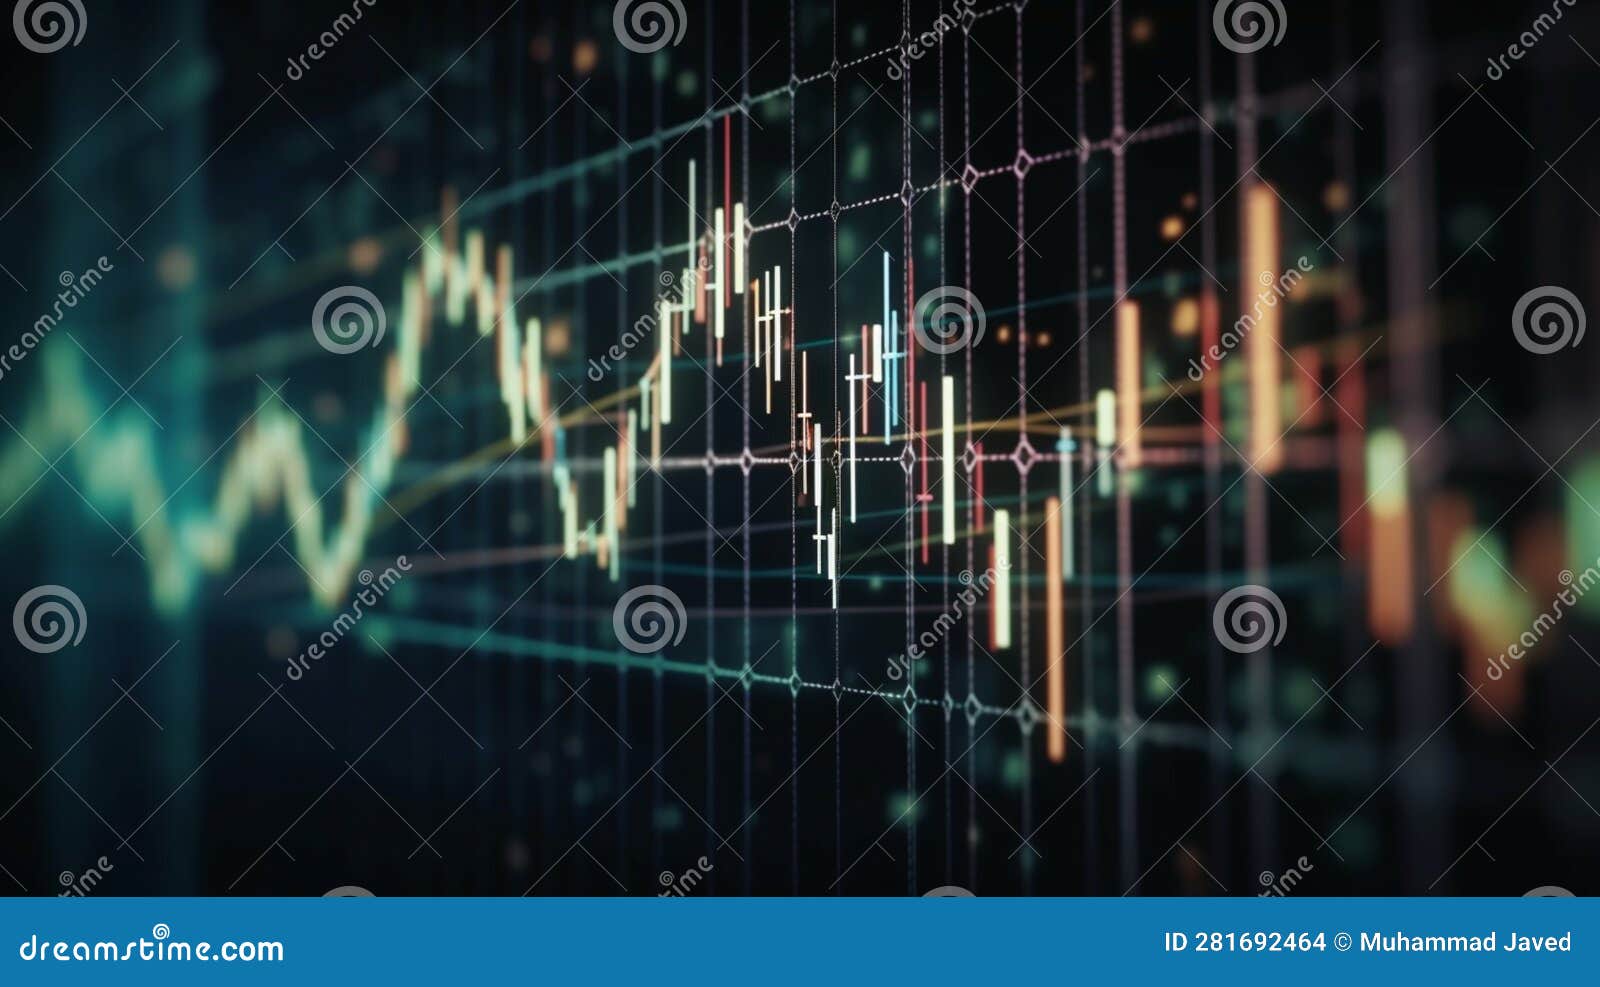 financial stock market graph. selective focus. depicts tradingview financial market chart.